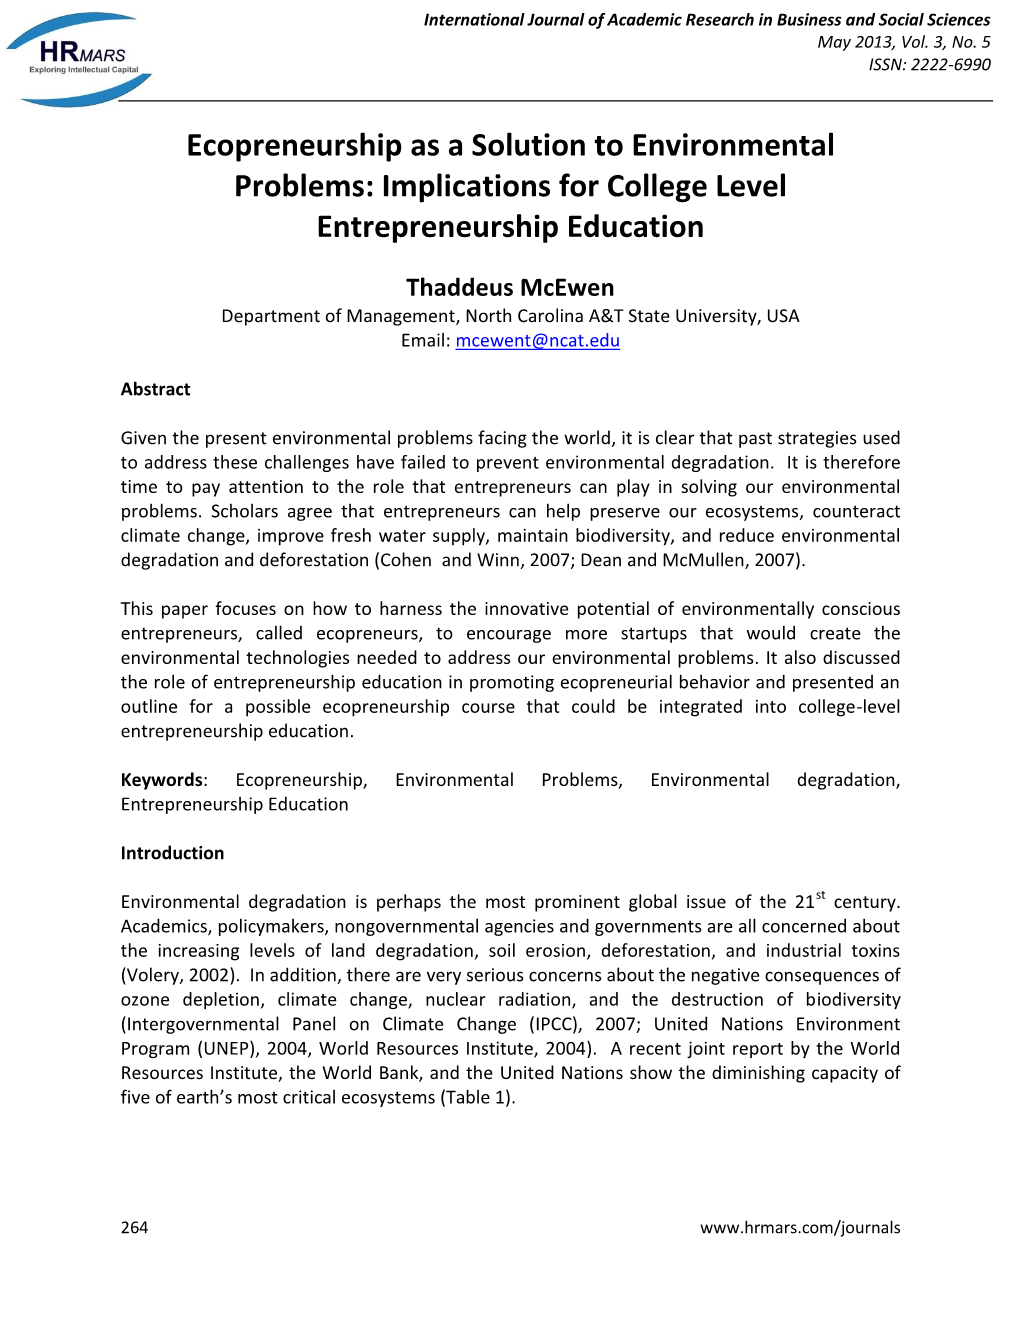 Ecopreneurship As a Solution to Environmental Problems: Implications for College Level Entrepreneurship Education